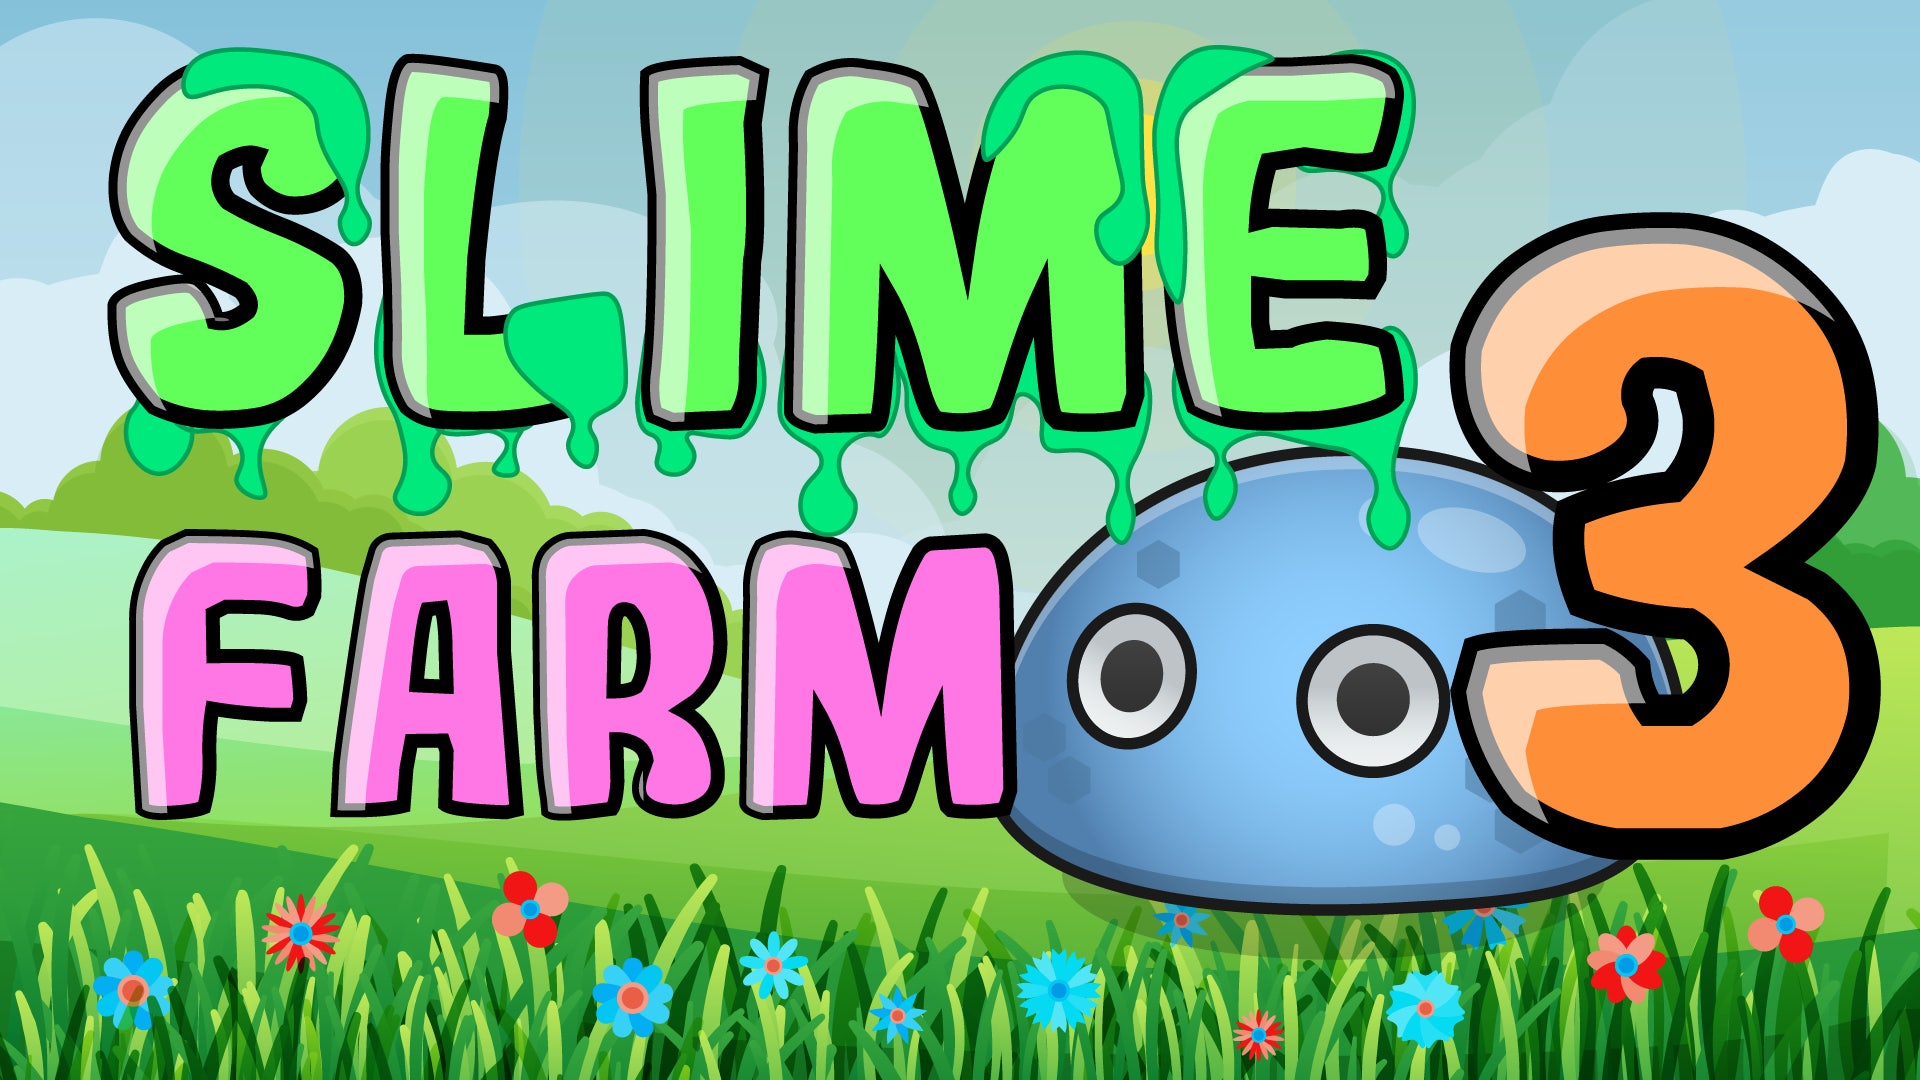 Slime Farm 3